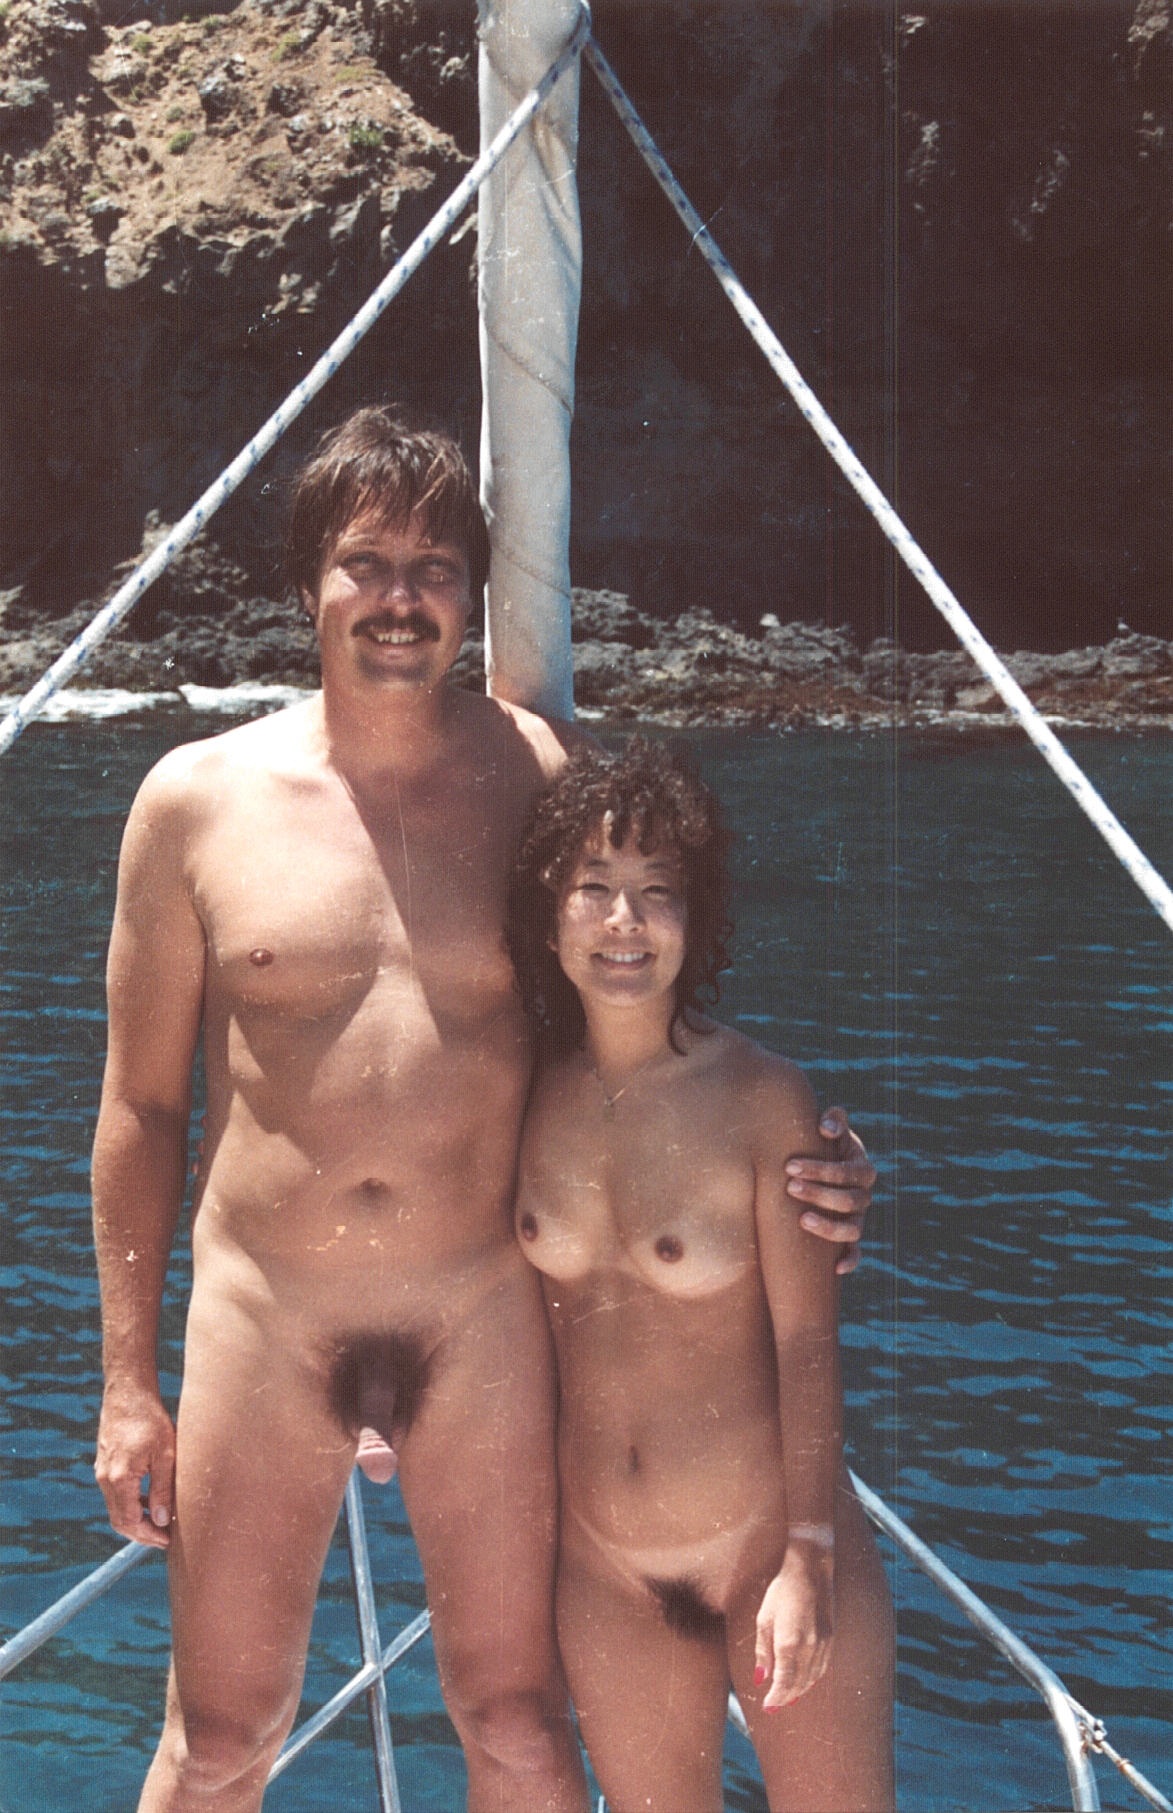 https://www.nudismlife.com/galleries/nudists_and_nude/nudists_couple/nudists_nude_naturists_couple_1759.jpg